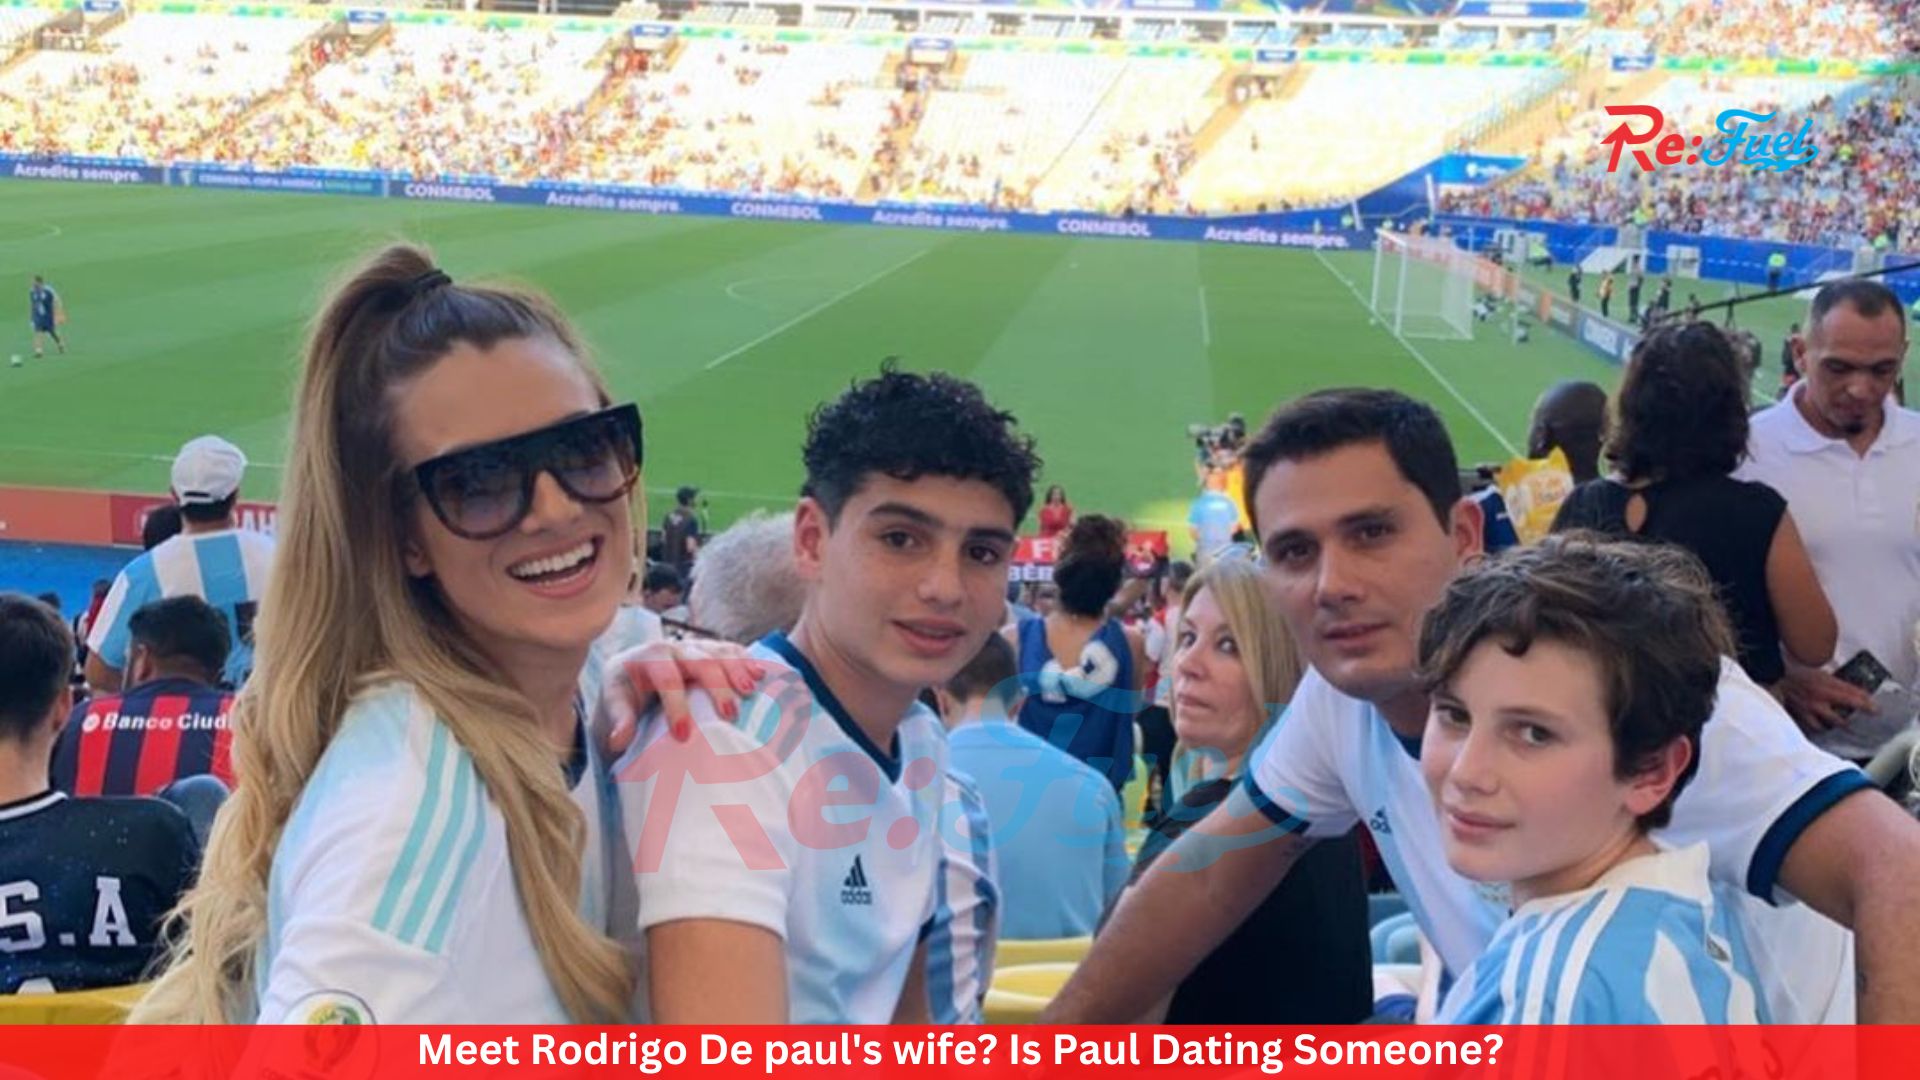 Meet Rodrigo De paul's wife? Is Paul Dating Someone?